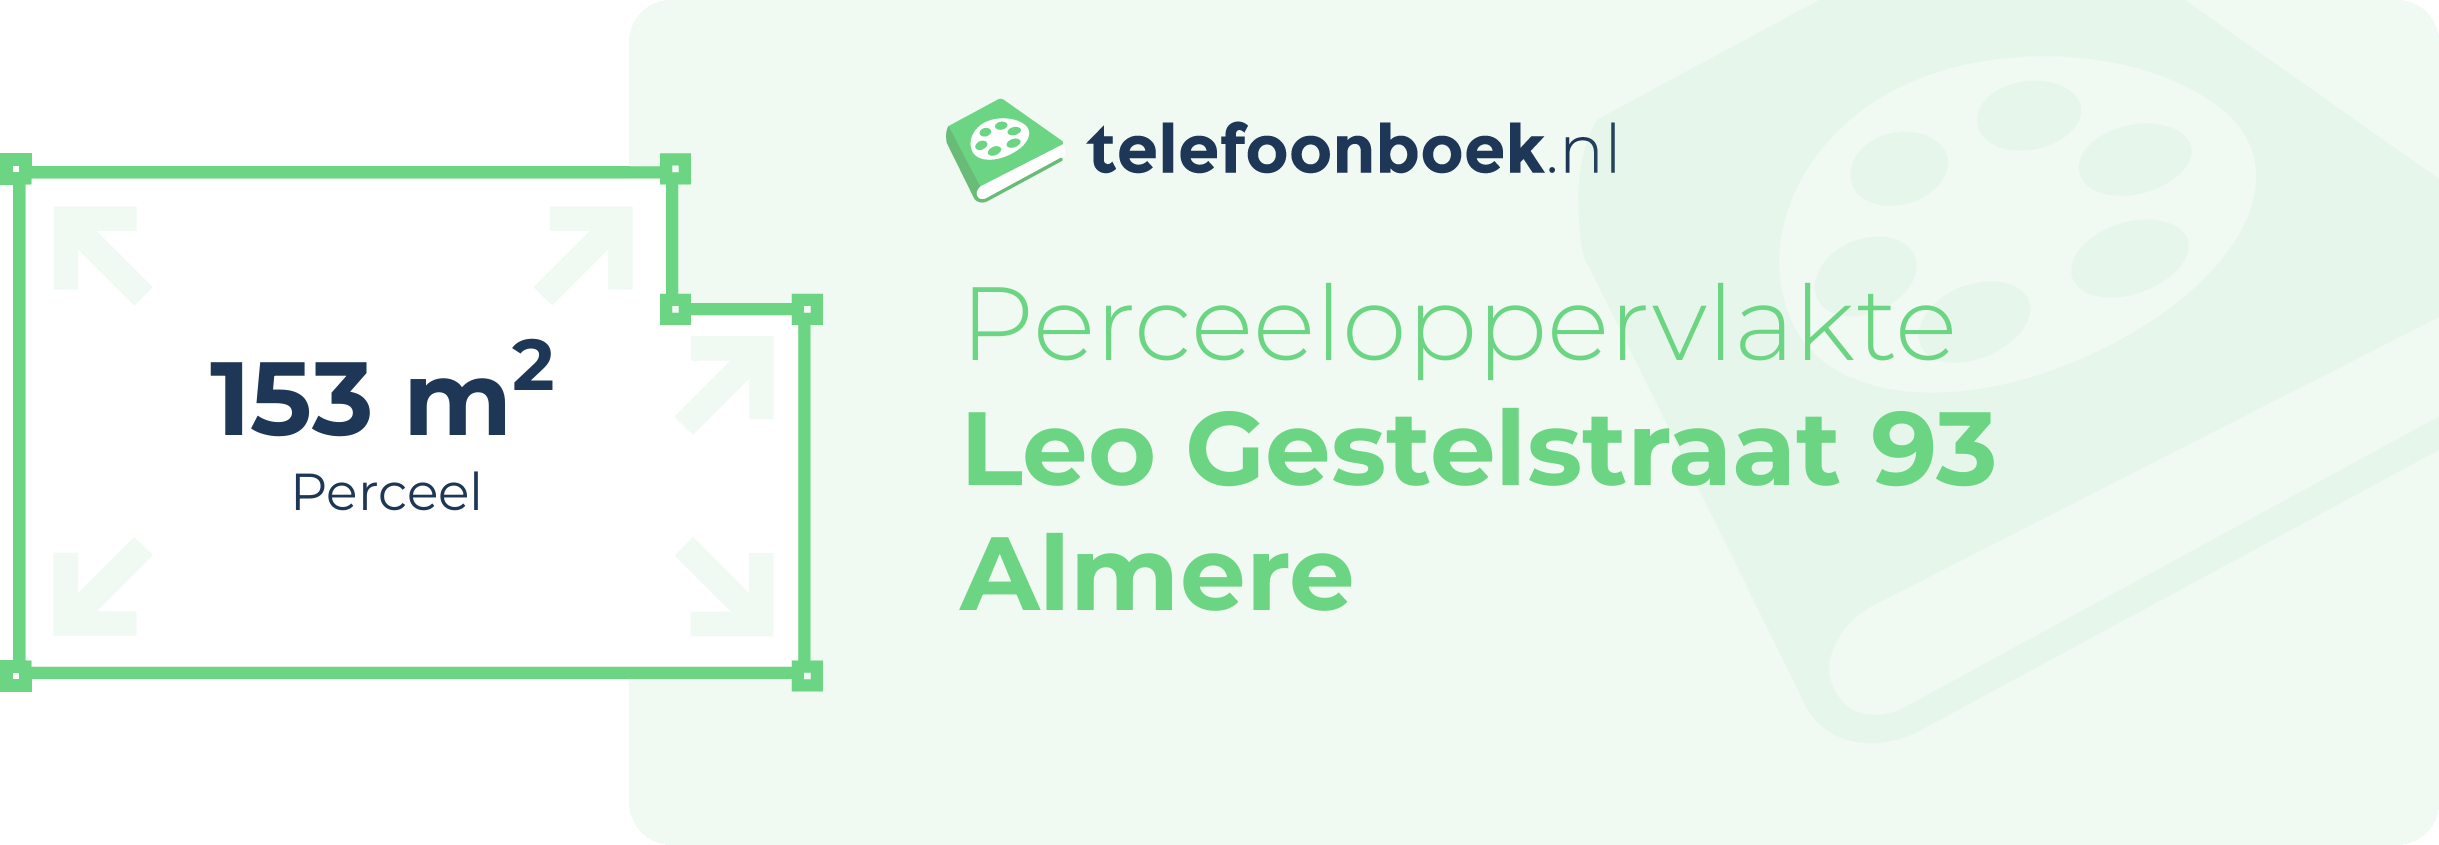 Perceeloppervlakte Leo Gestelstraat 93 Almere